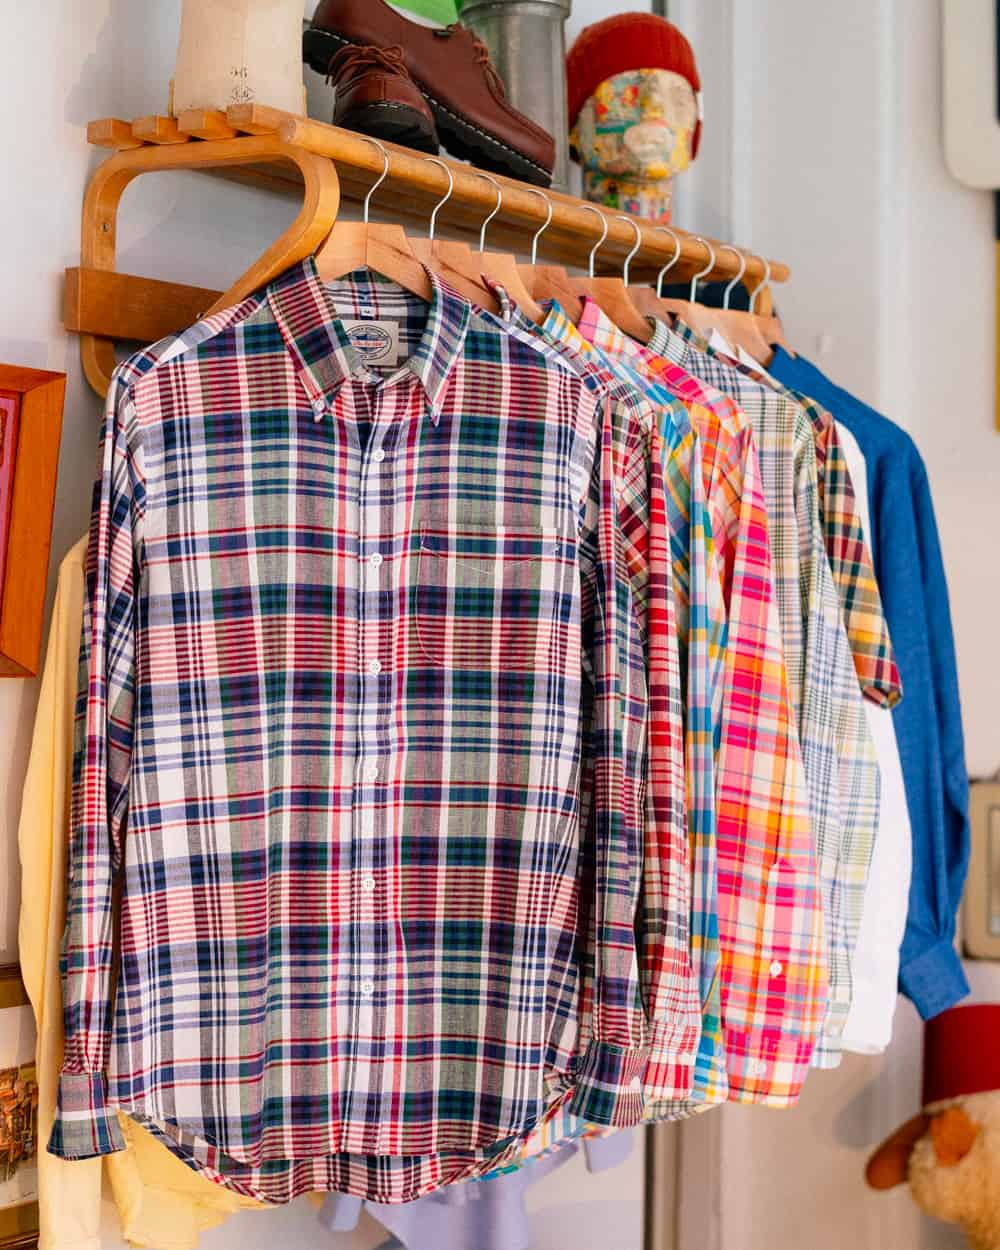 A rail of brightly colored John Simons preppy madras check shirts